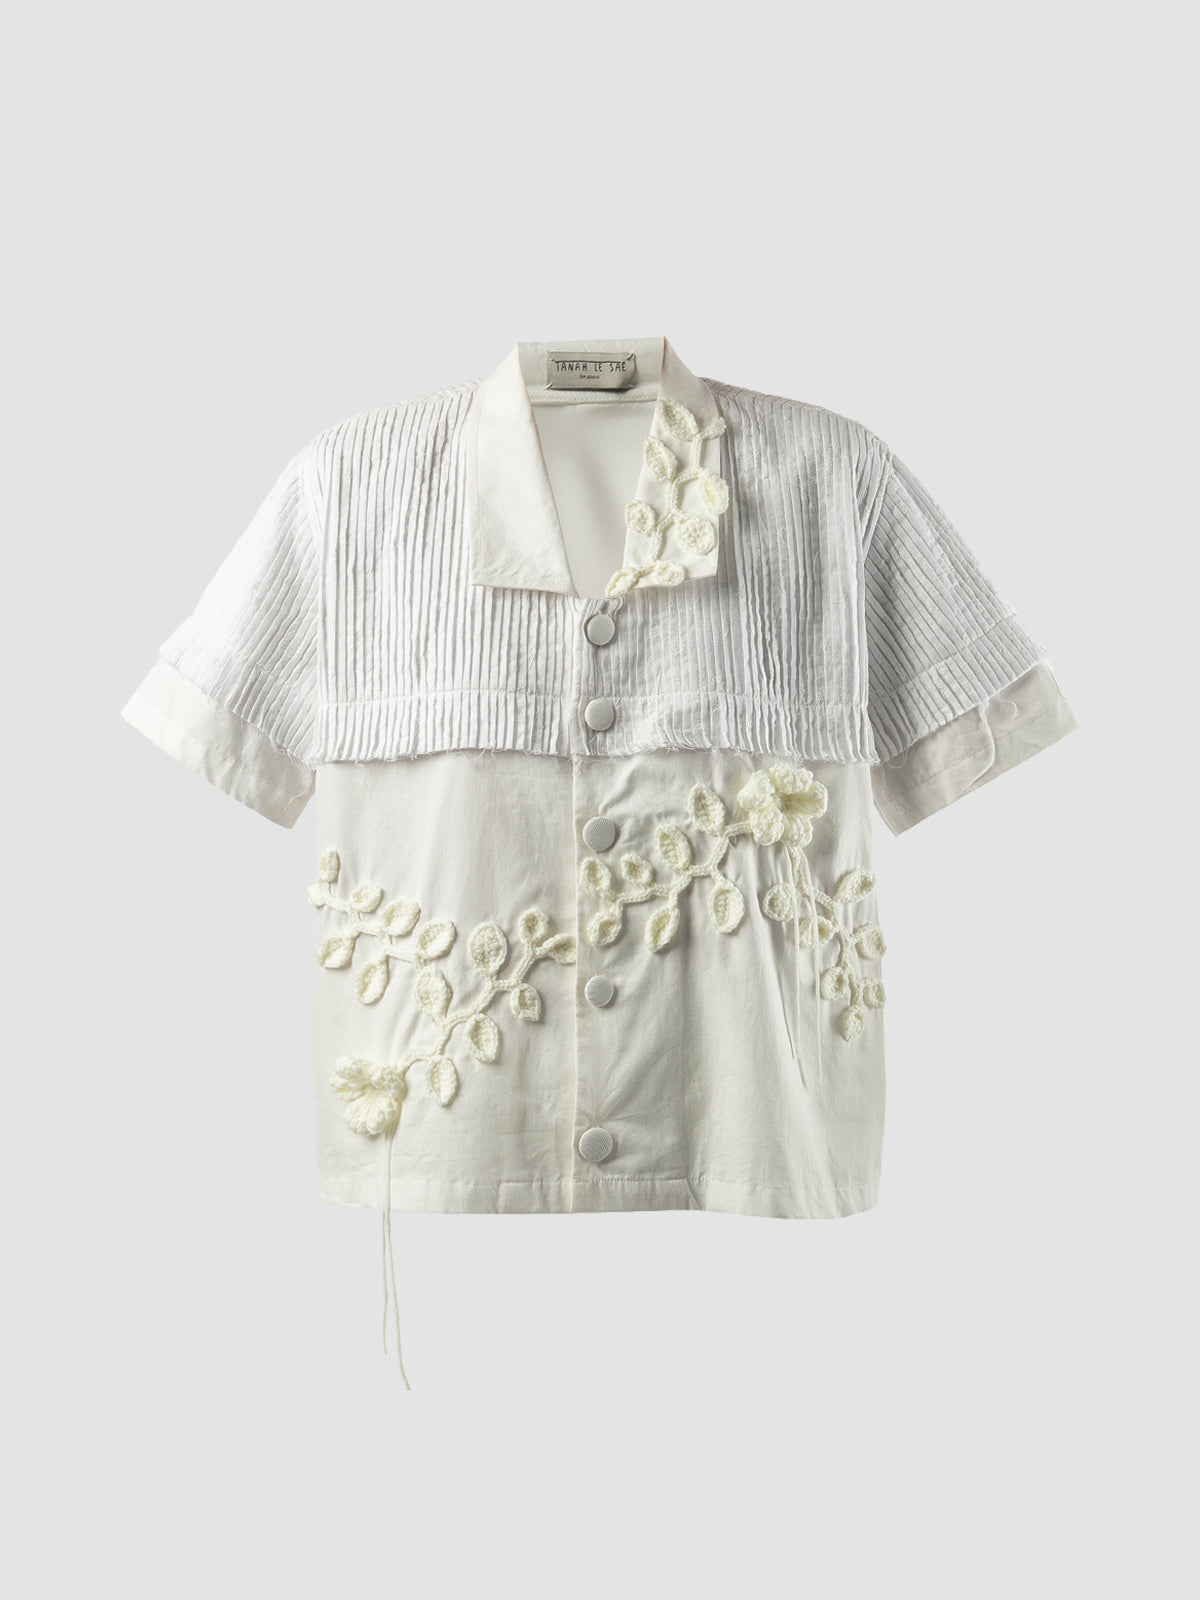 S/S Shirt Pleats Crochet In Off White